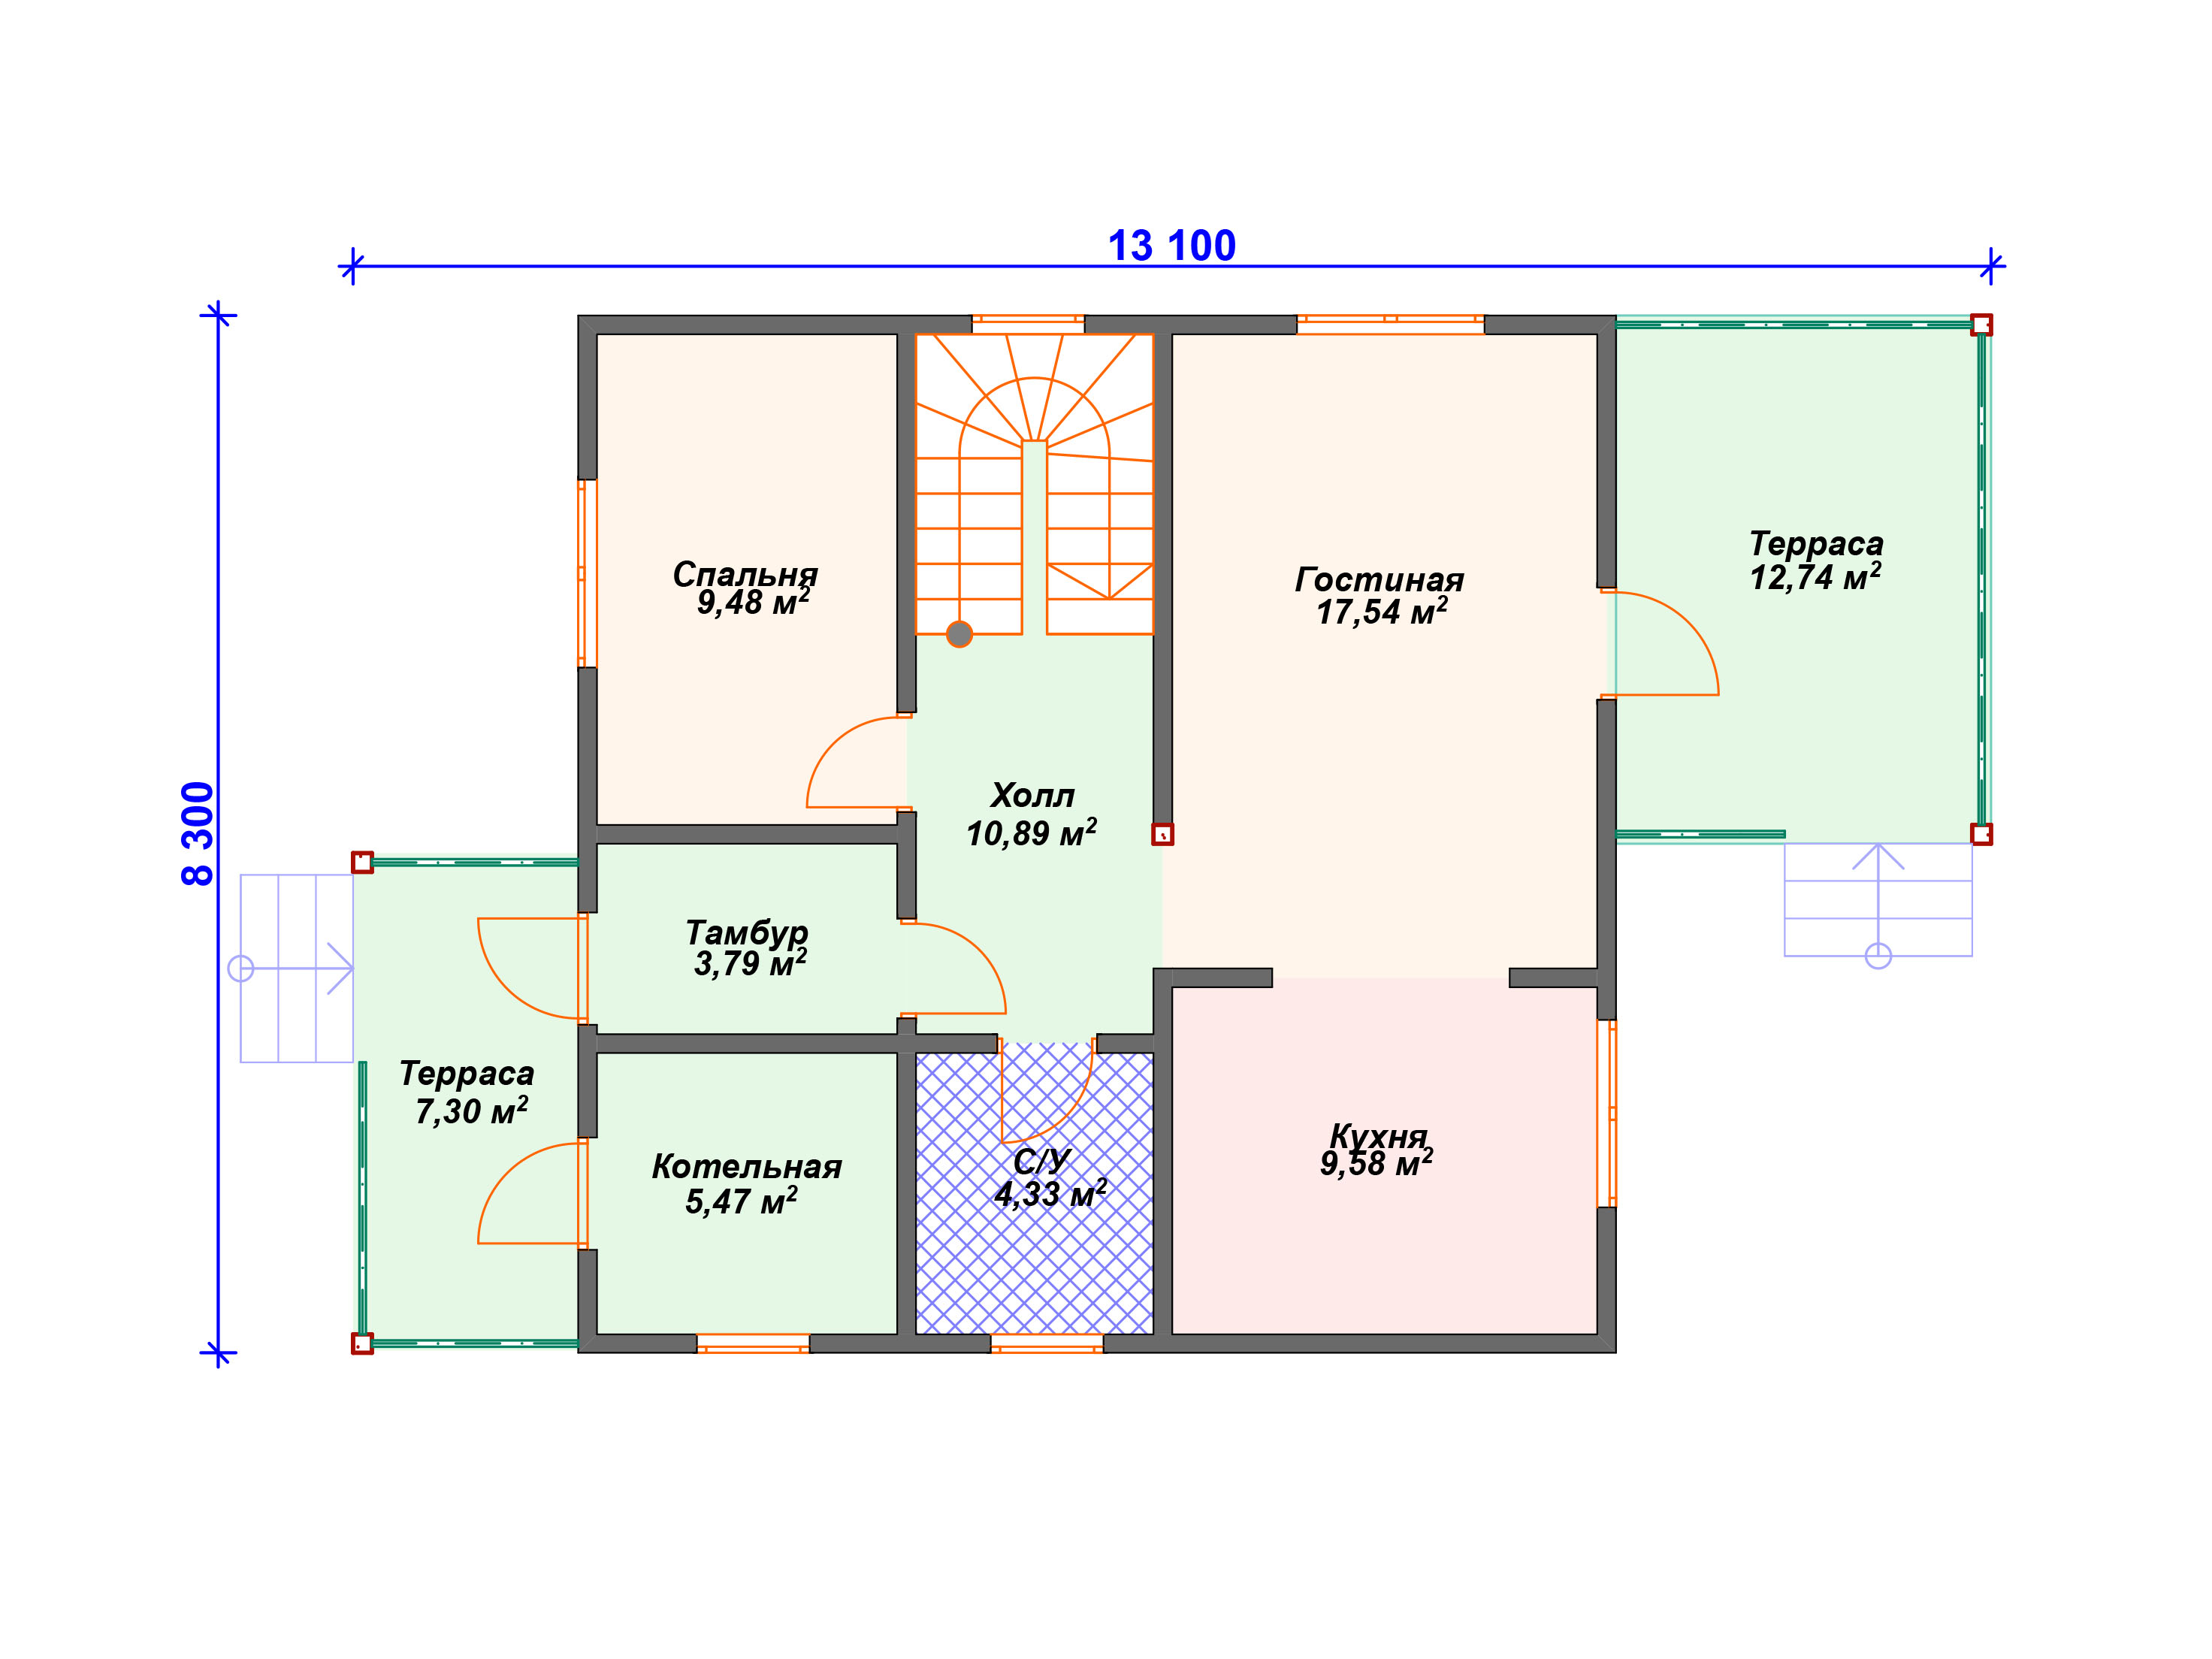 Схема каркасного дома И-004 1 этаж